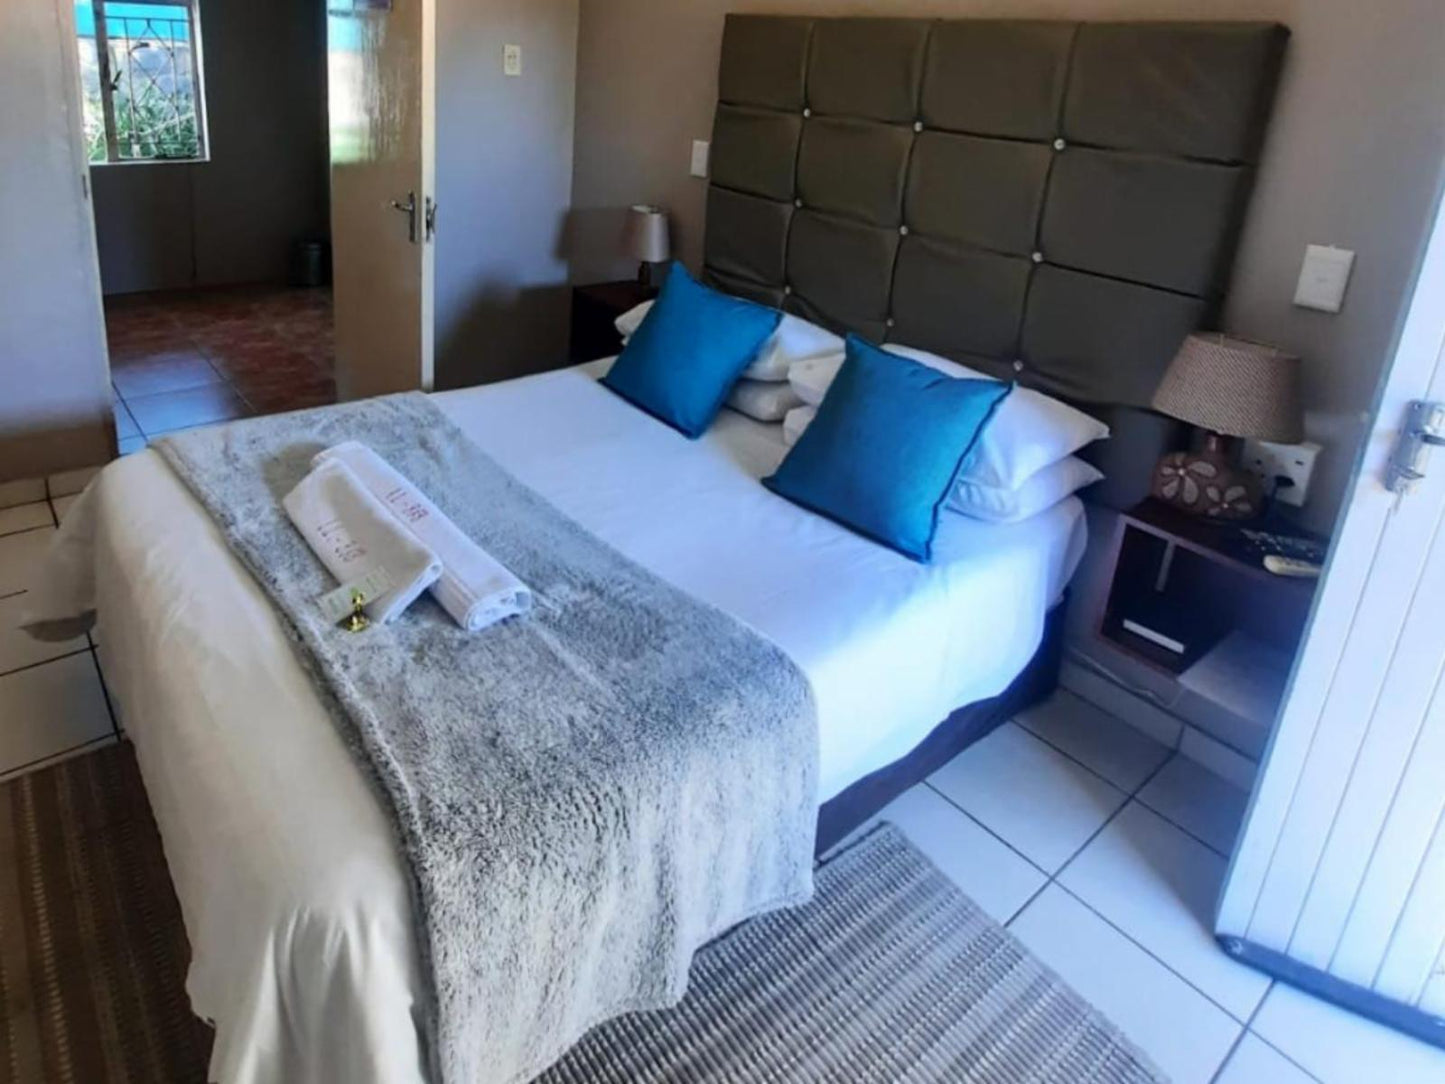 Standard Queen Rooms @ Lavender Lane Bed And Breakfast